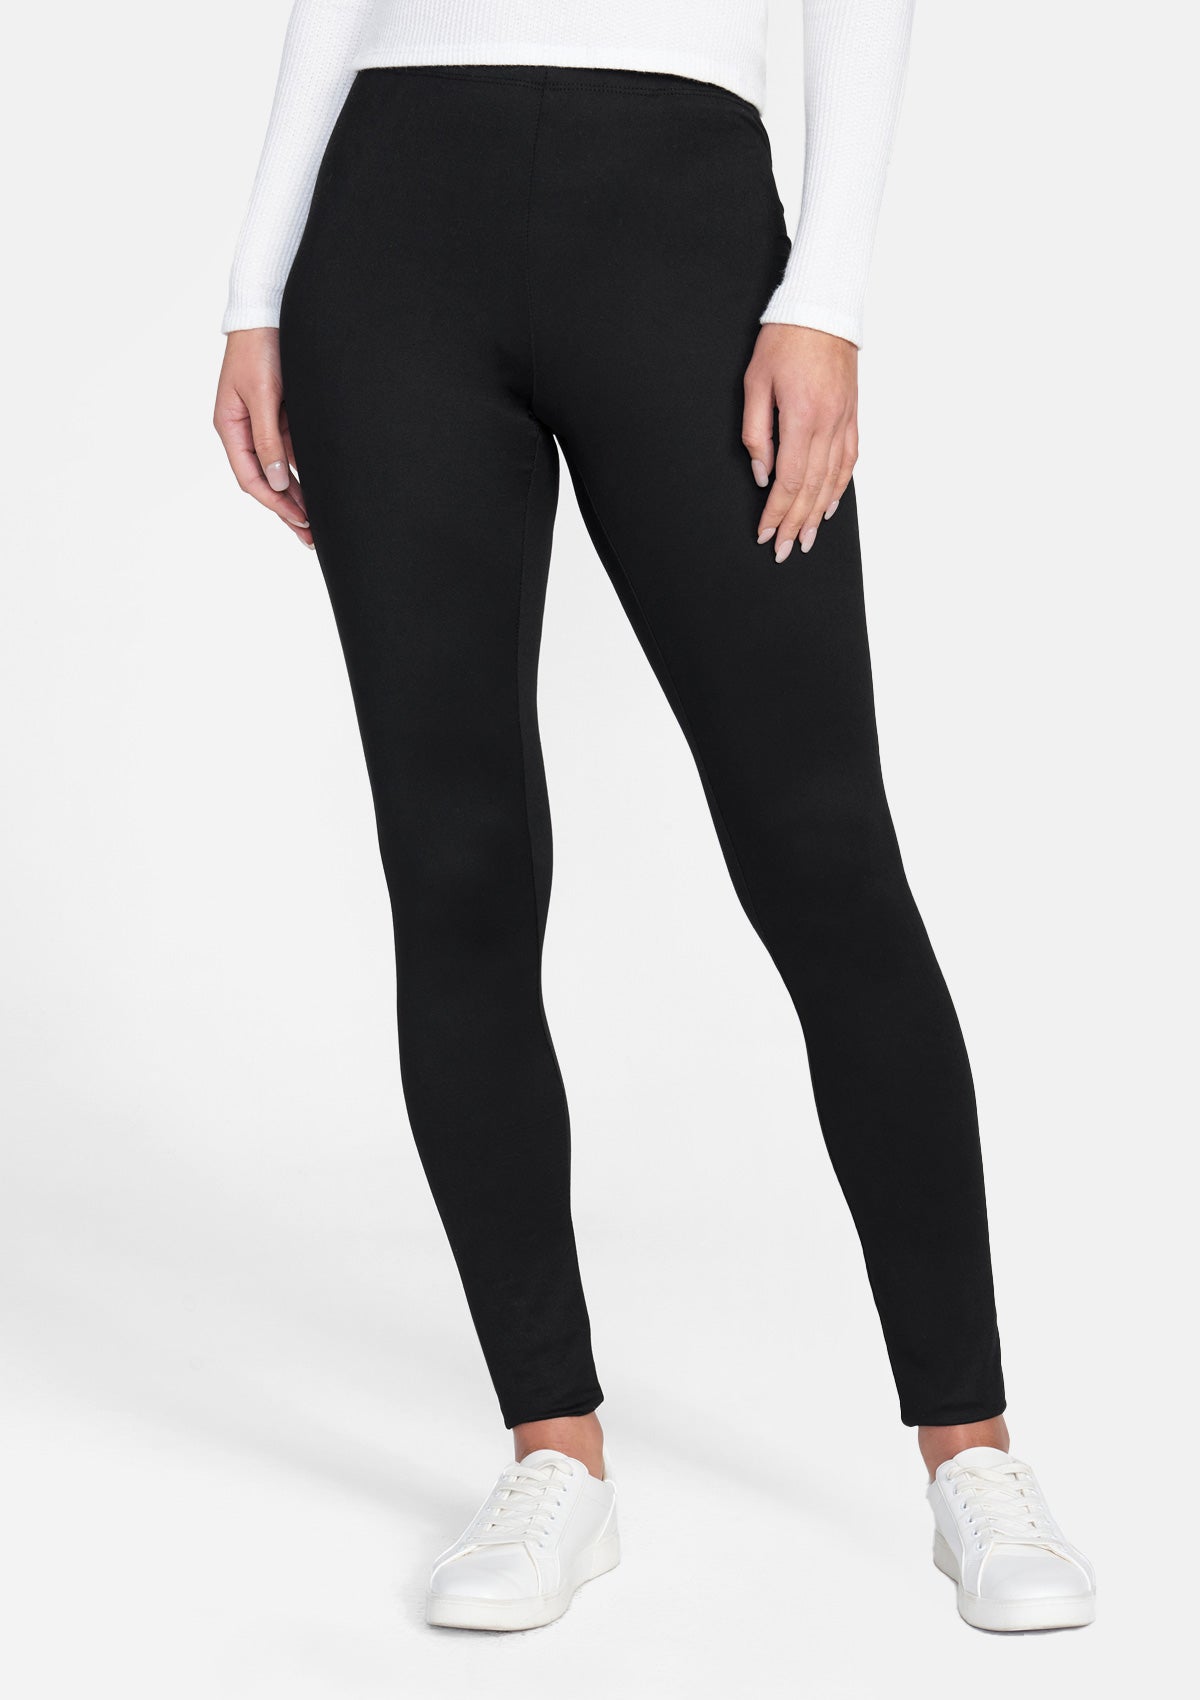 Alloy Apparel Tall High Waist Basic Leggings for Women in Black Size XL length 37 | Polyester